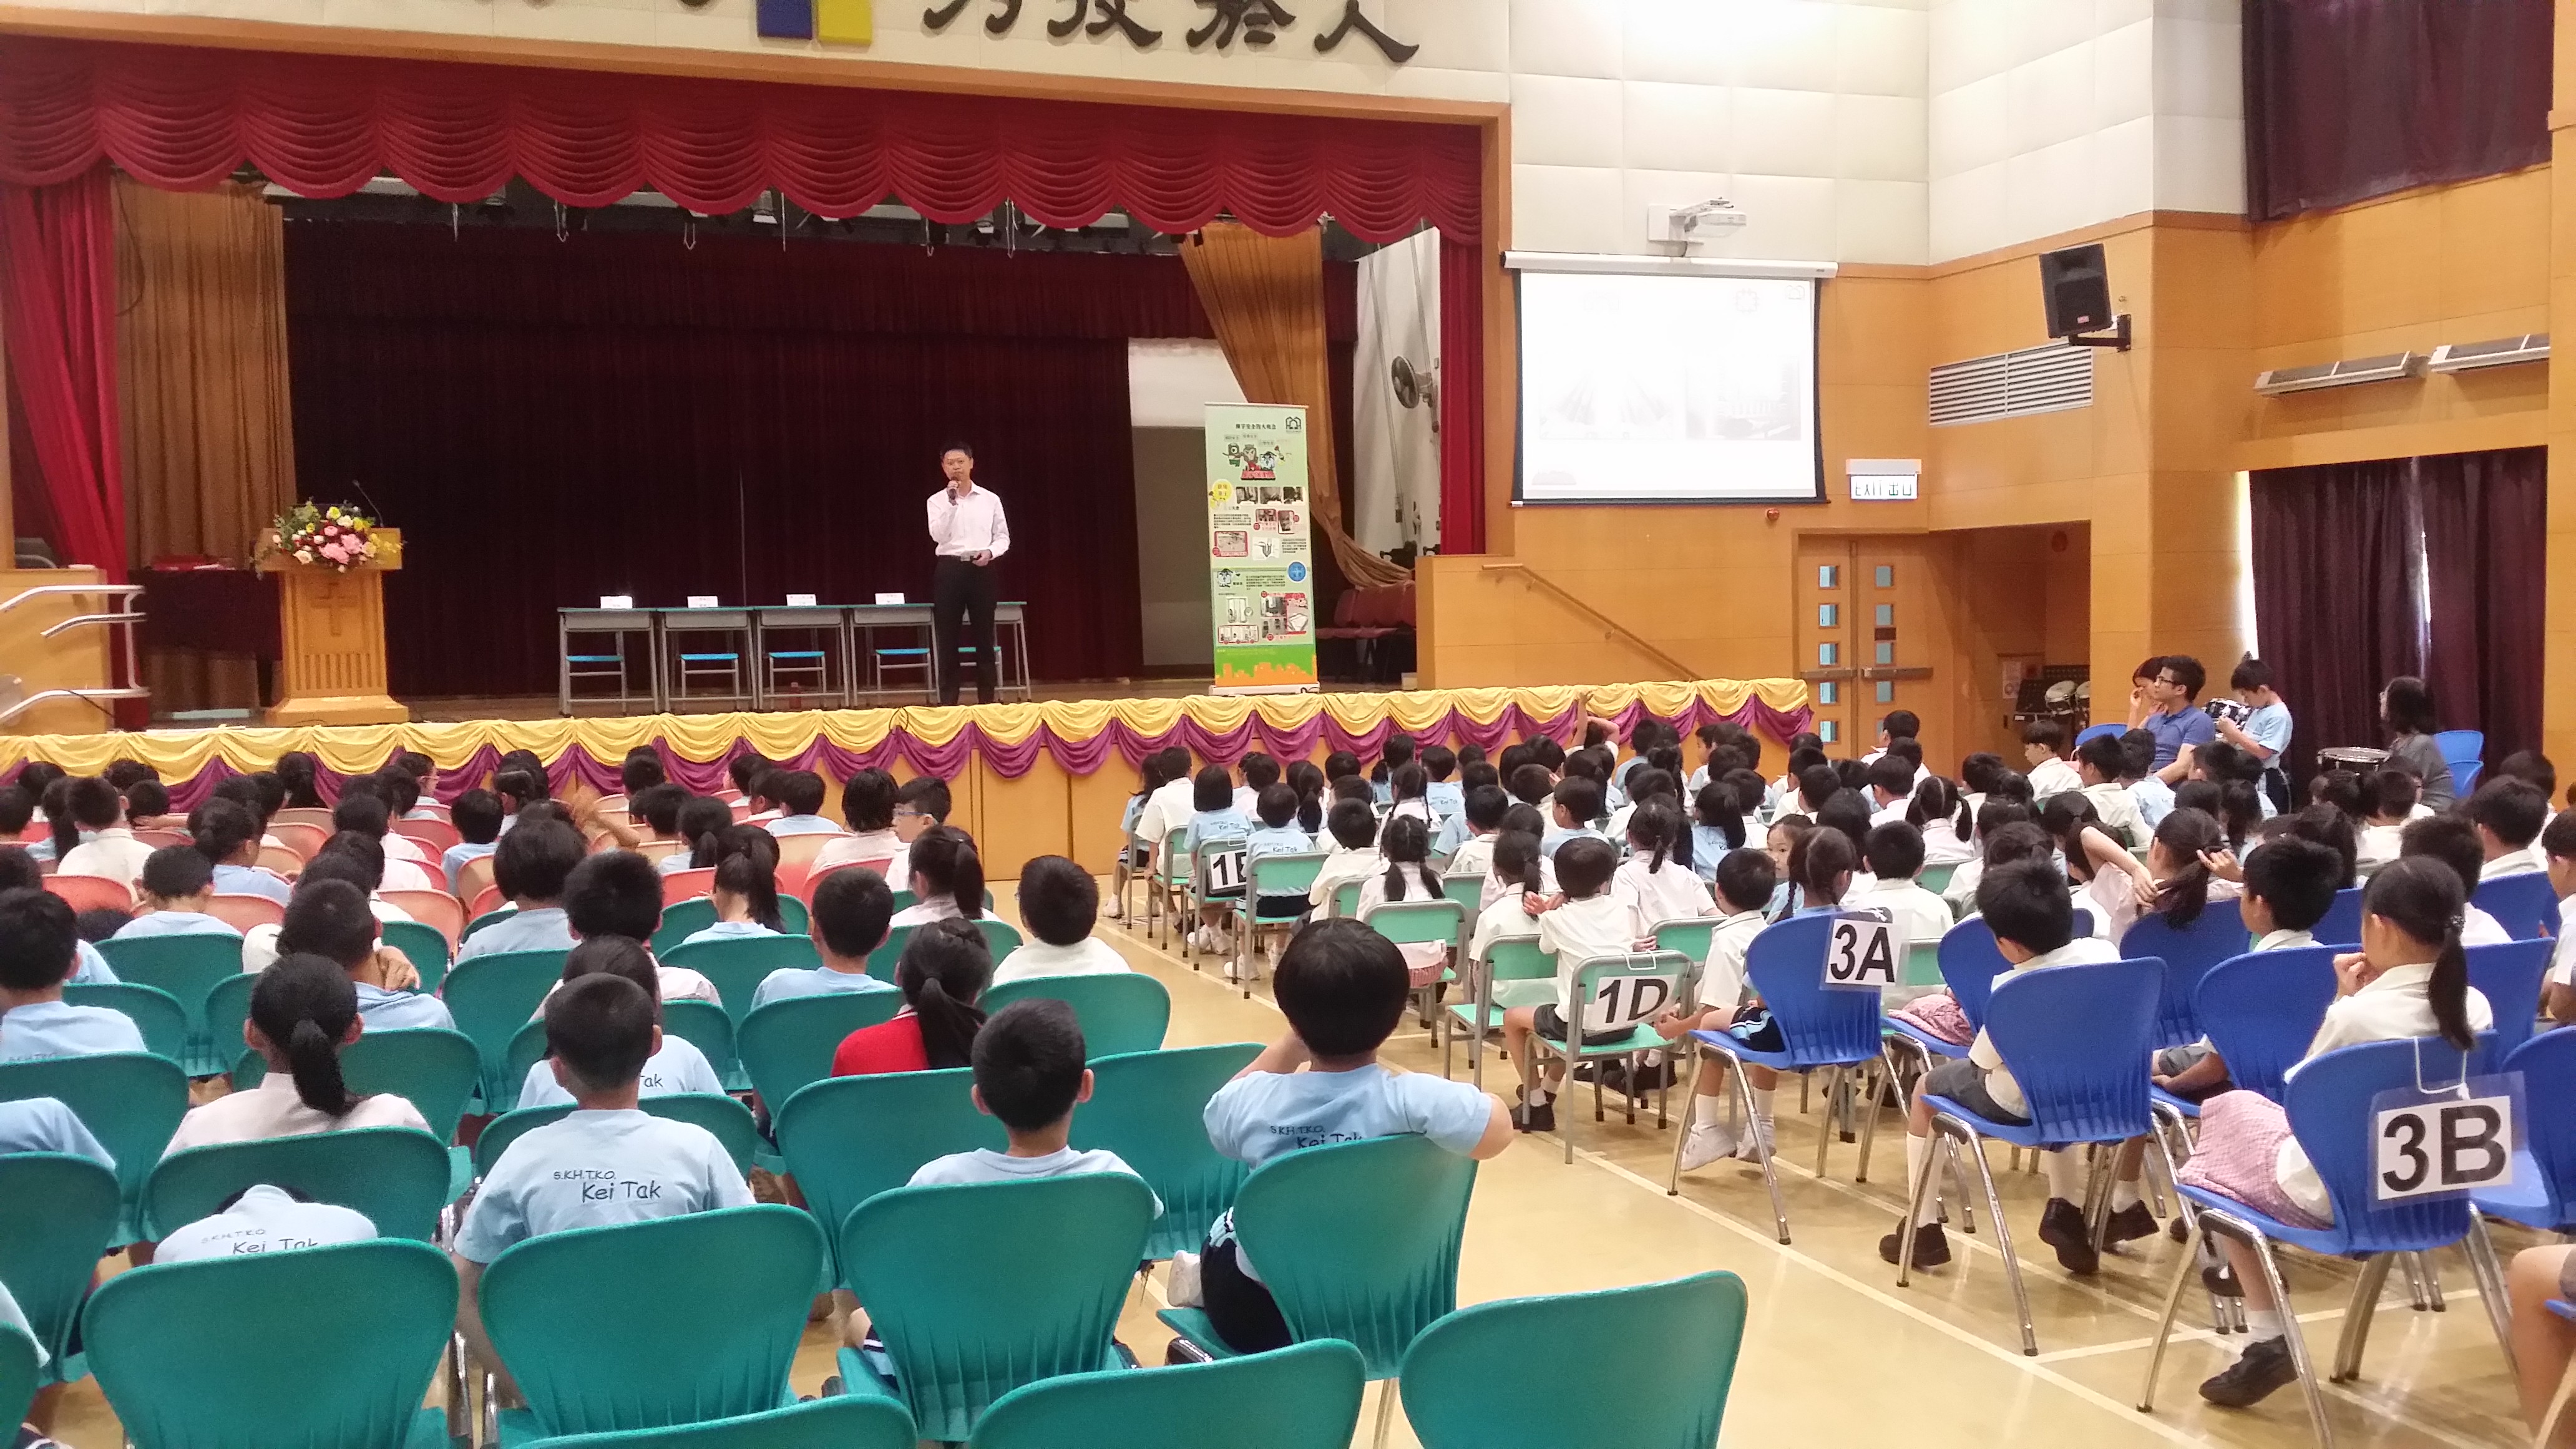 SKH Tseung Kwan O Kei Tak Primary School